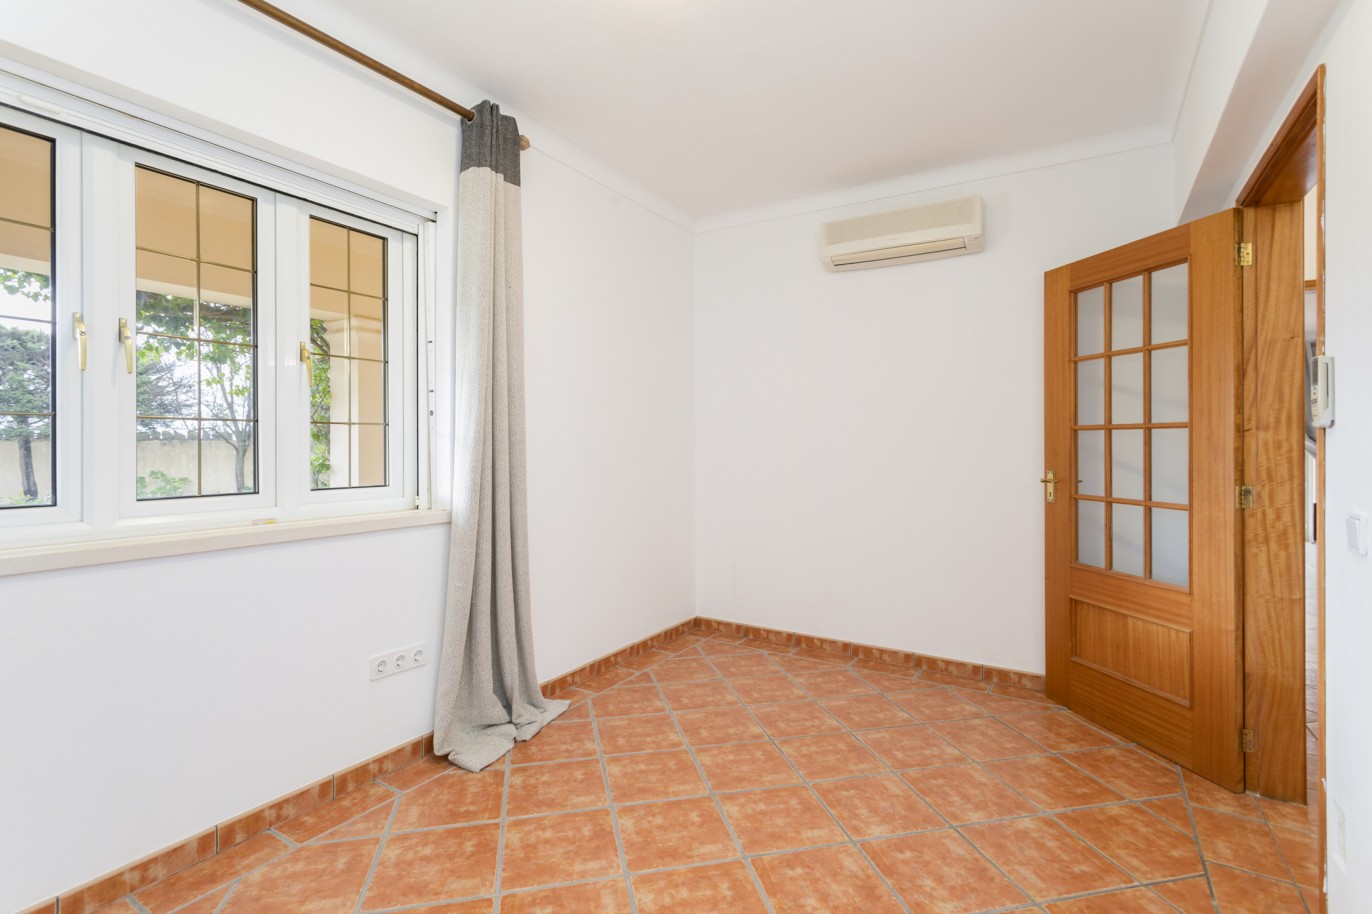 4 Bedroom Villa with swimming pool for sale in Loulé, Algarve_214827